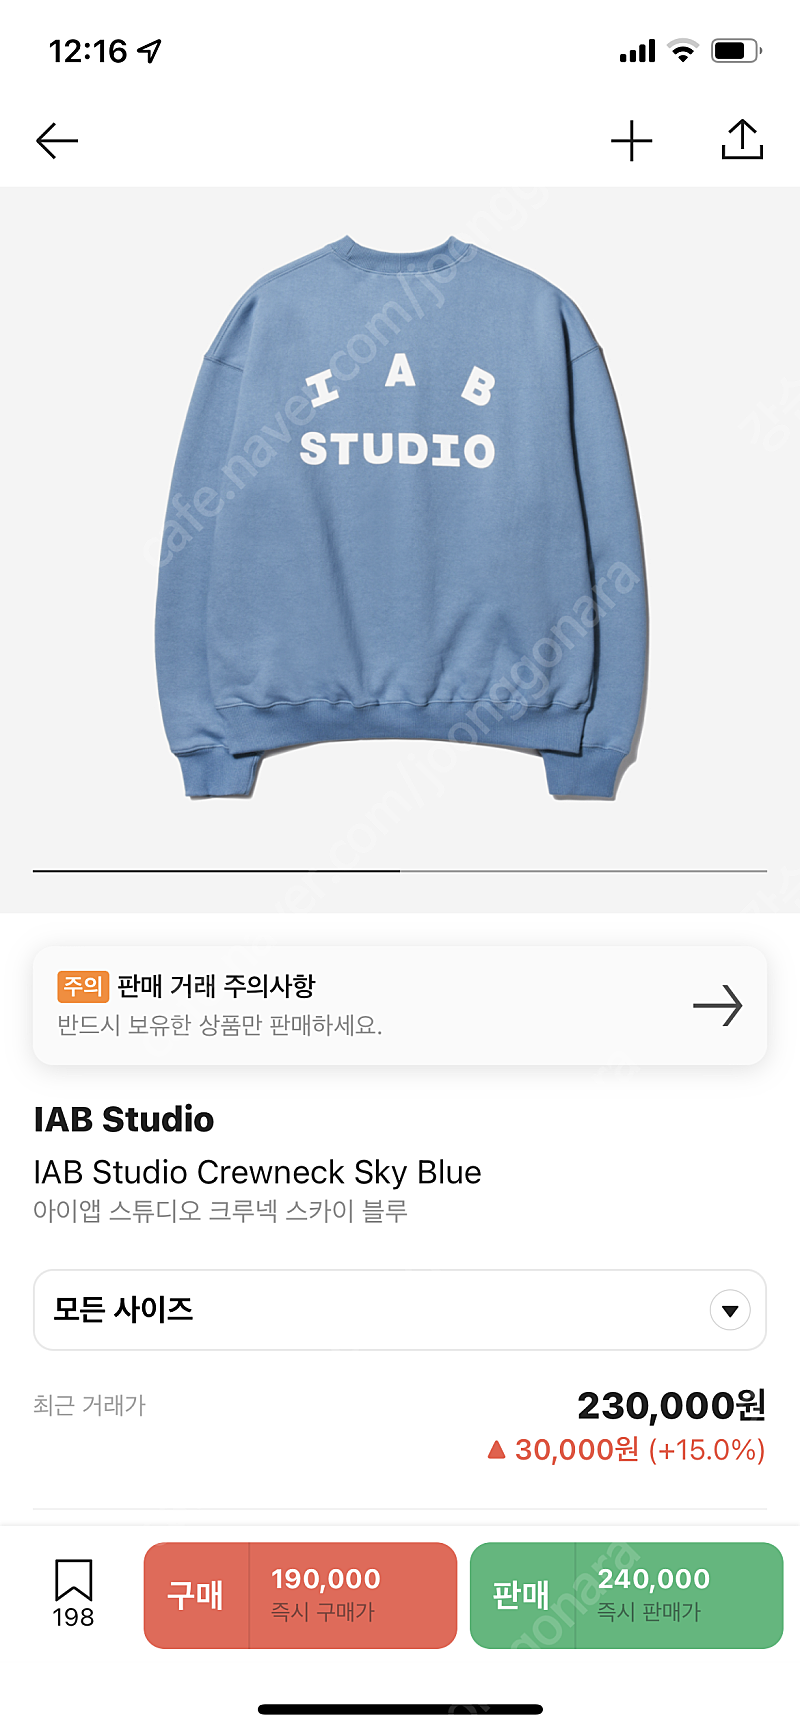 iab studio 아이앱 스카이블루 맨투맨XL 새상품 판매